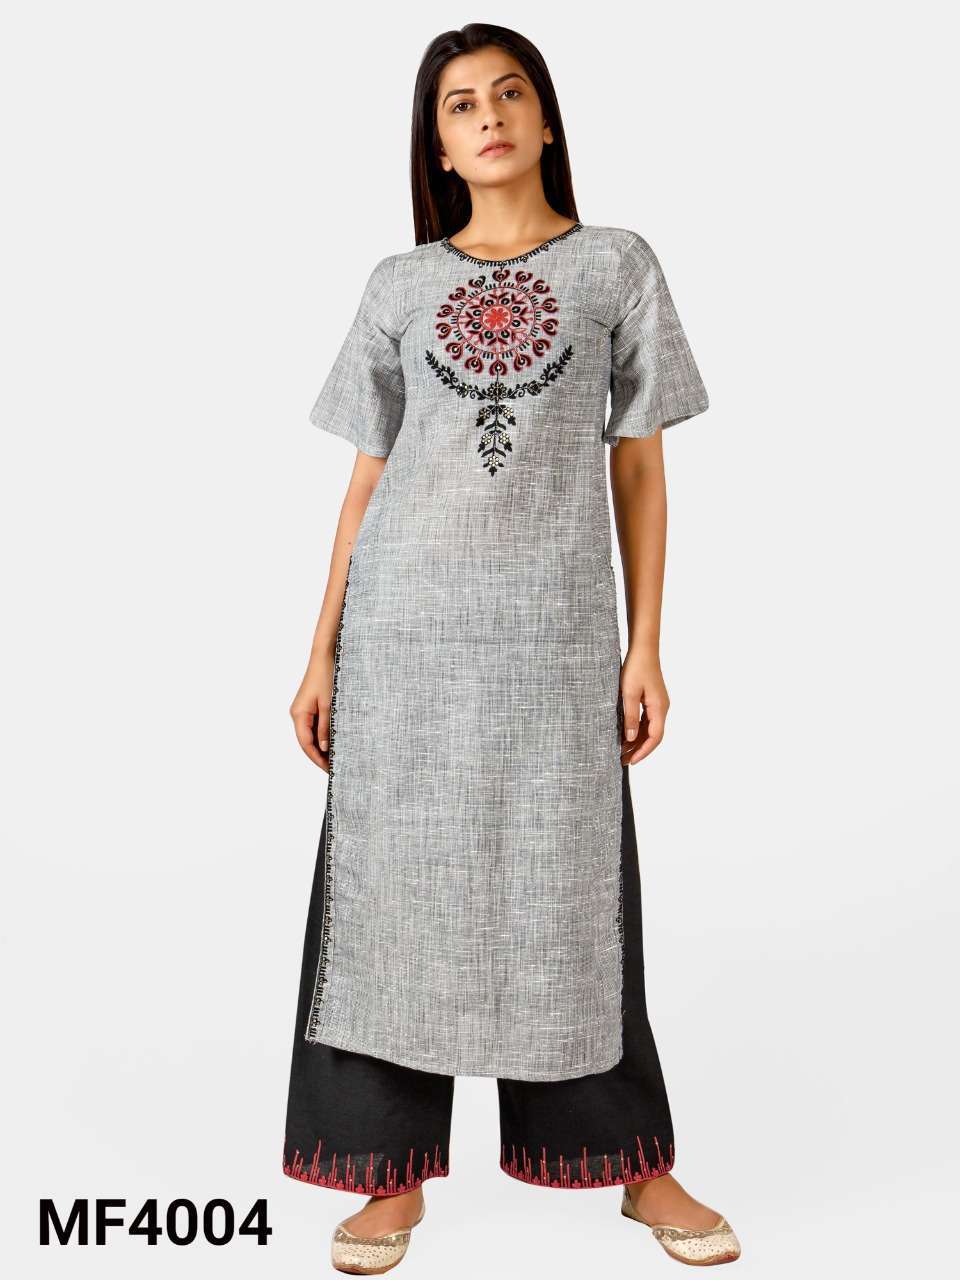 Mesmora Indian Women Fancy Casual Wear 100% Khadi Cotton Top And